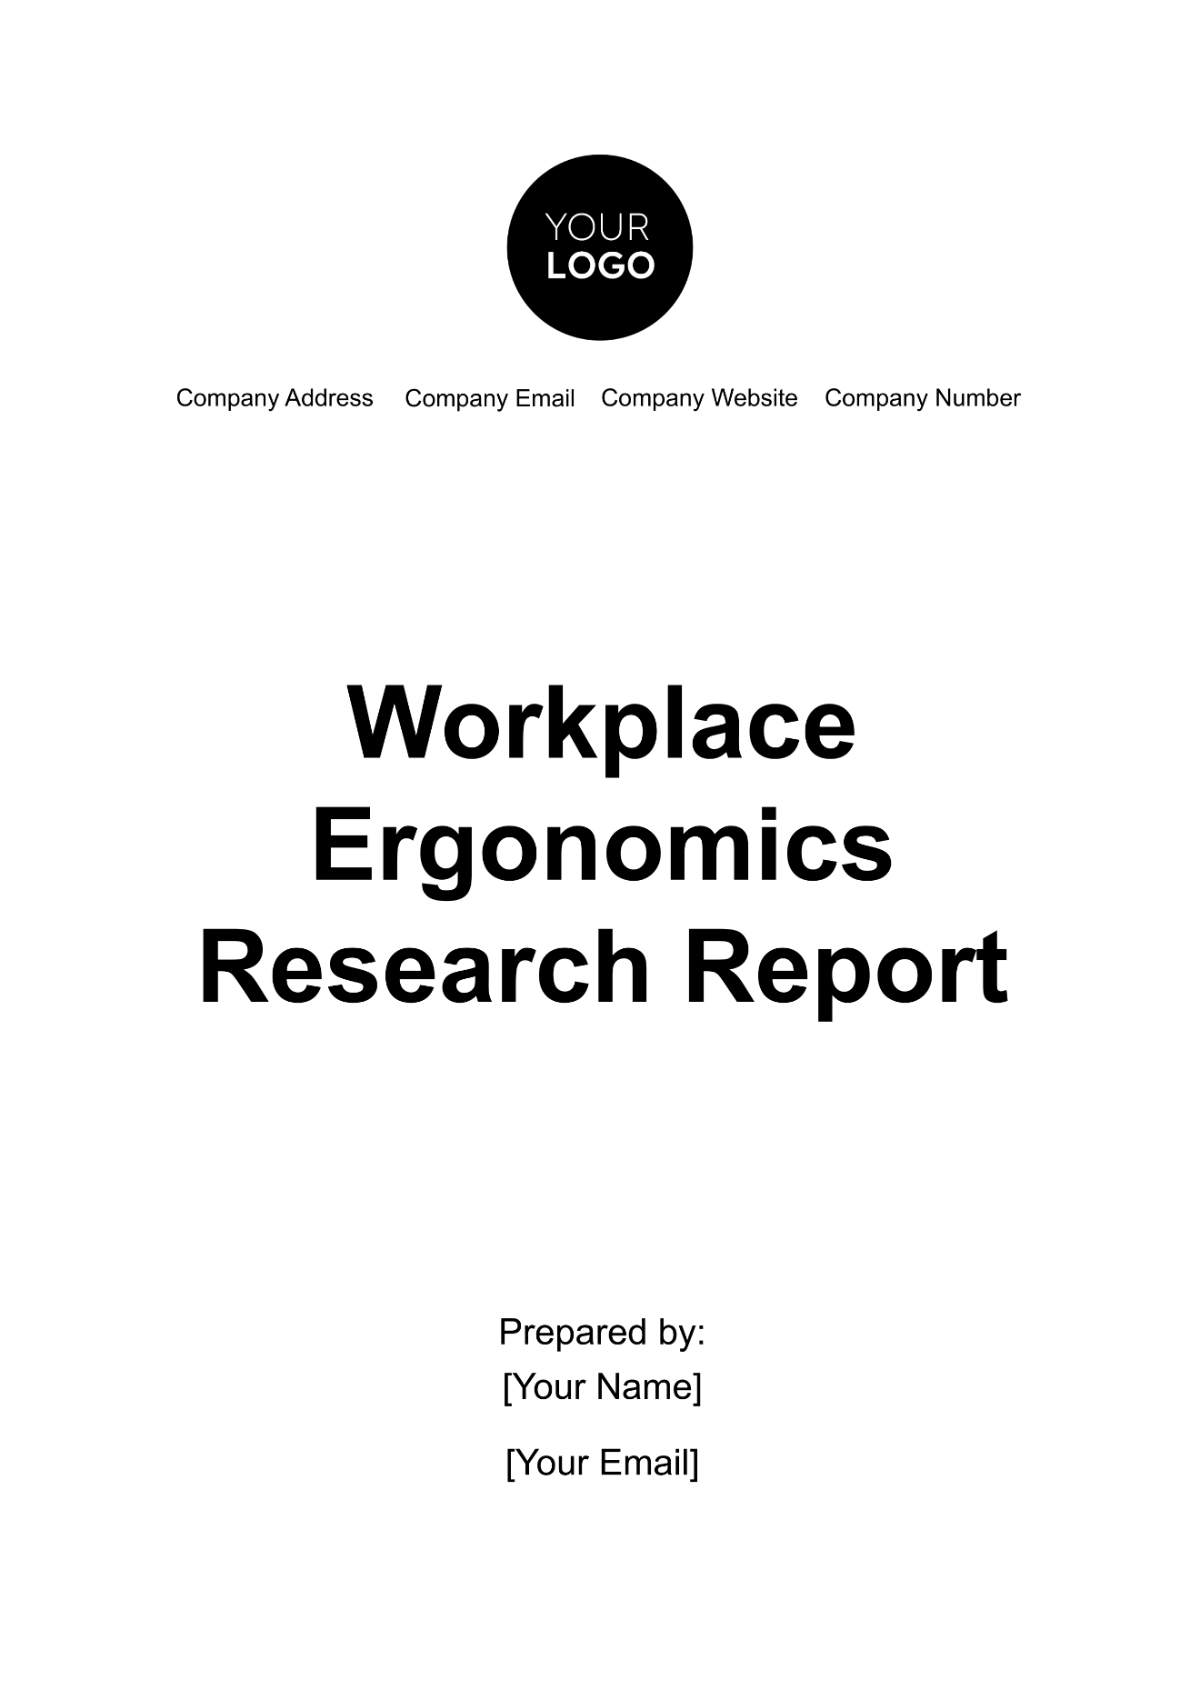 Workplace Ergonomics Research Report Template